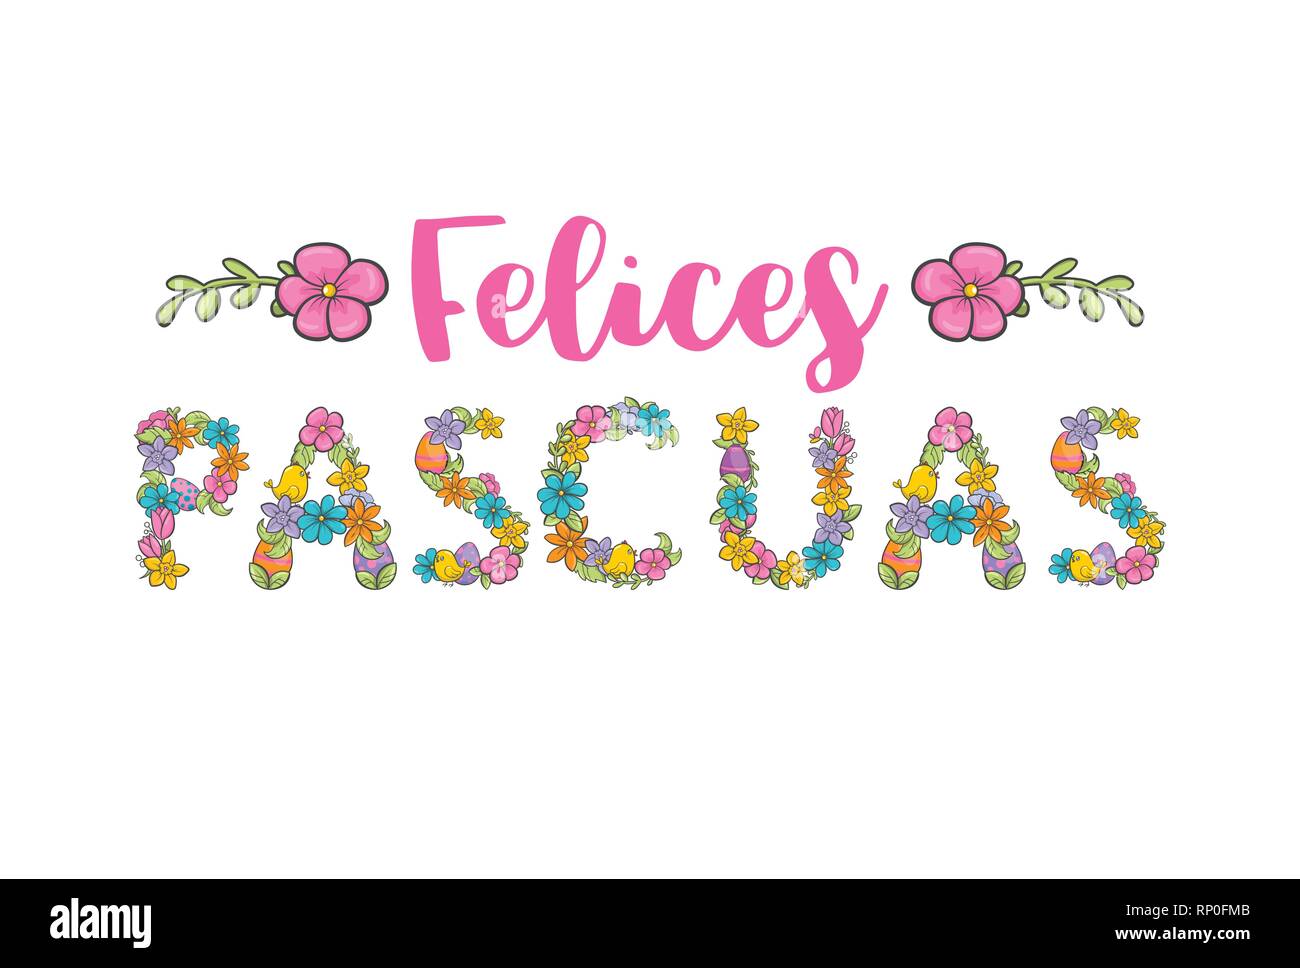 Felices pascuas, spanish easter greeting flower card. Christian church festival ornament. Stock Vector